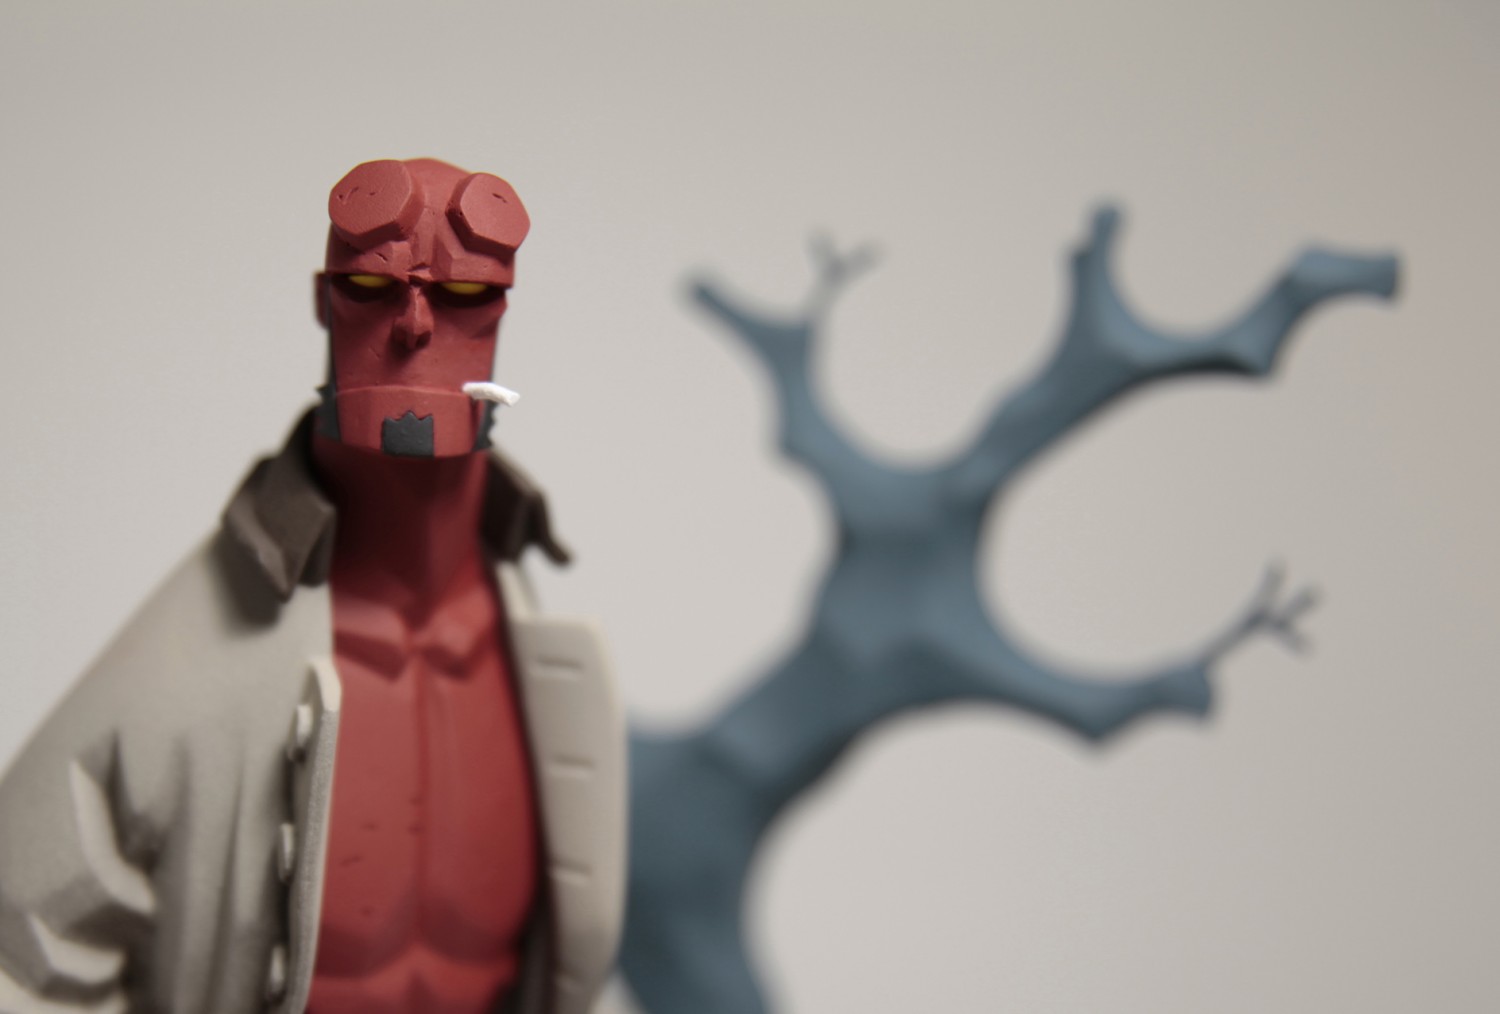 Hellboy III - Fariboles - Statuette résine 22,5 cm